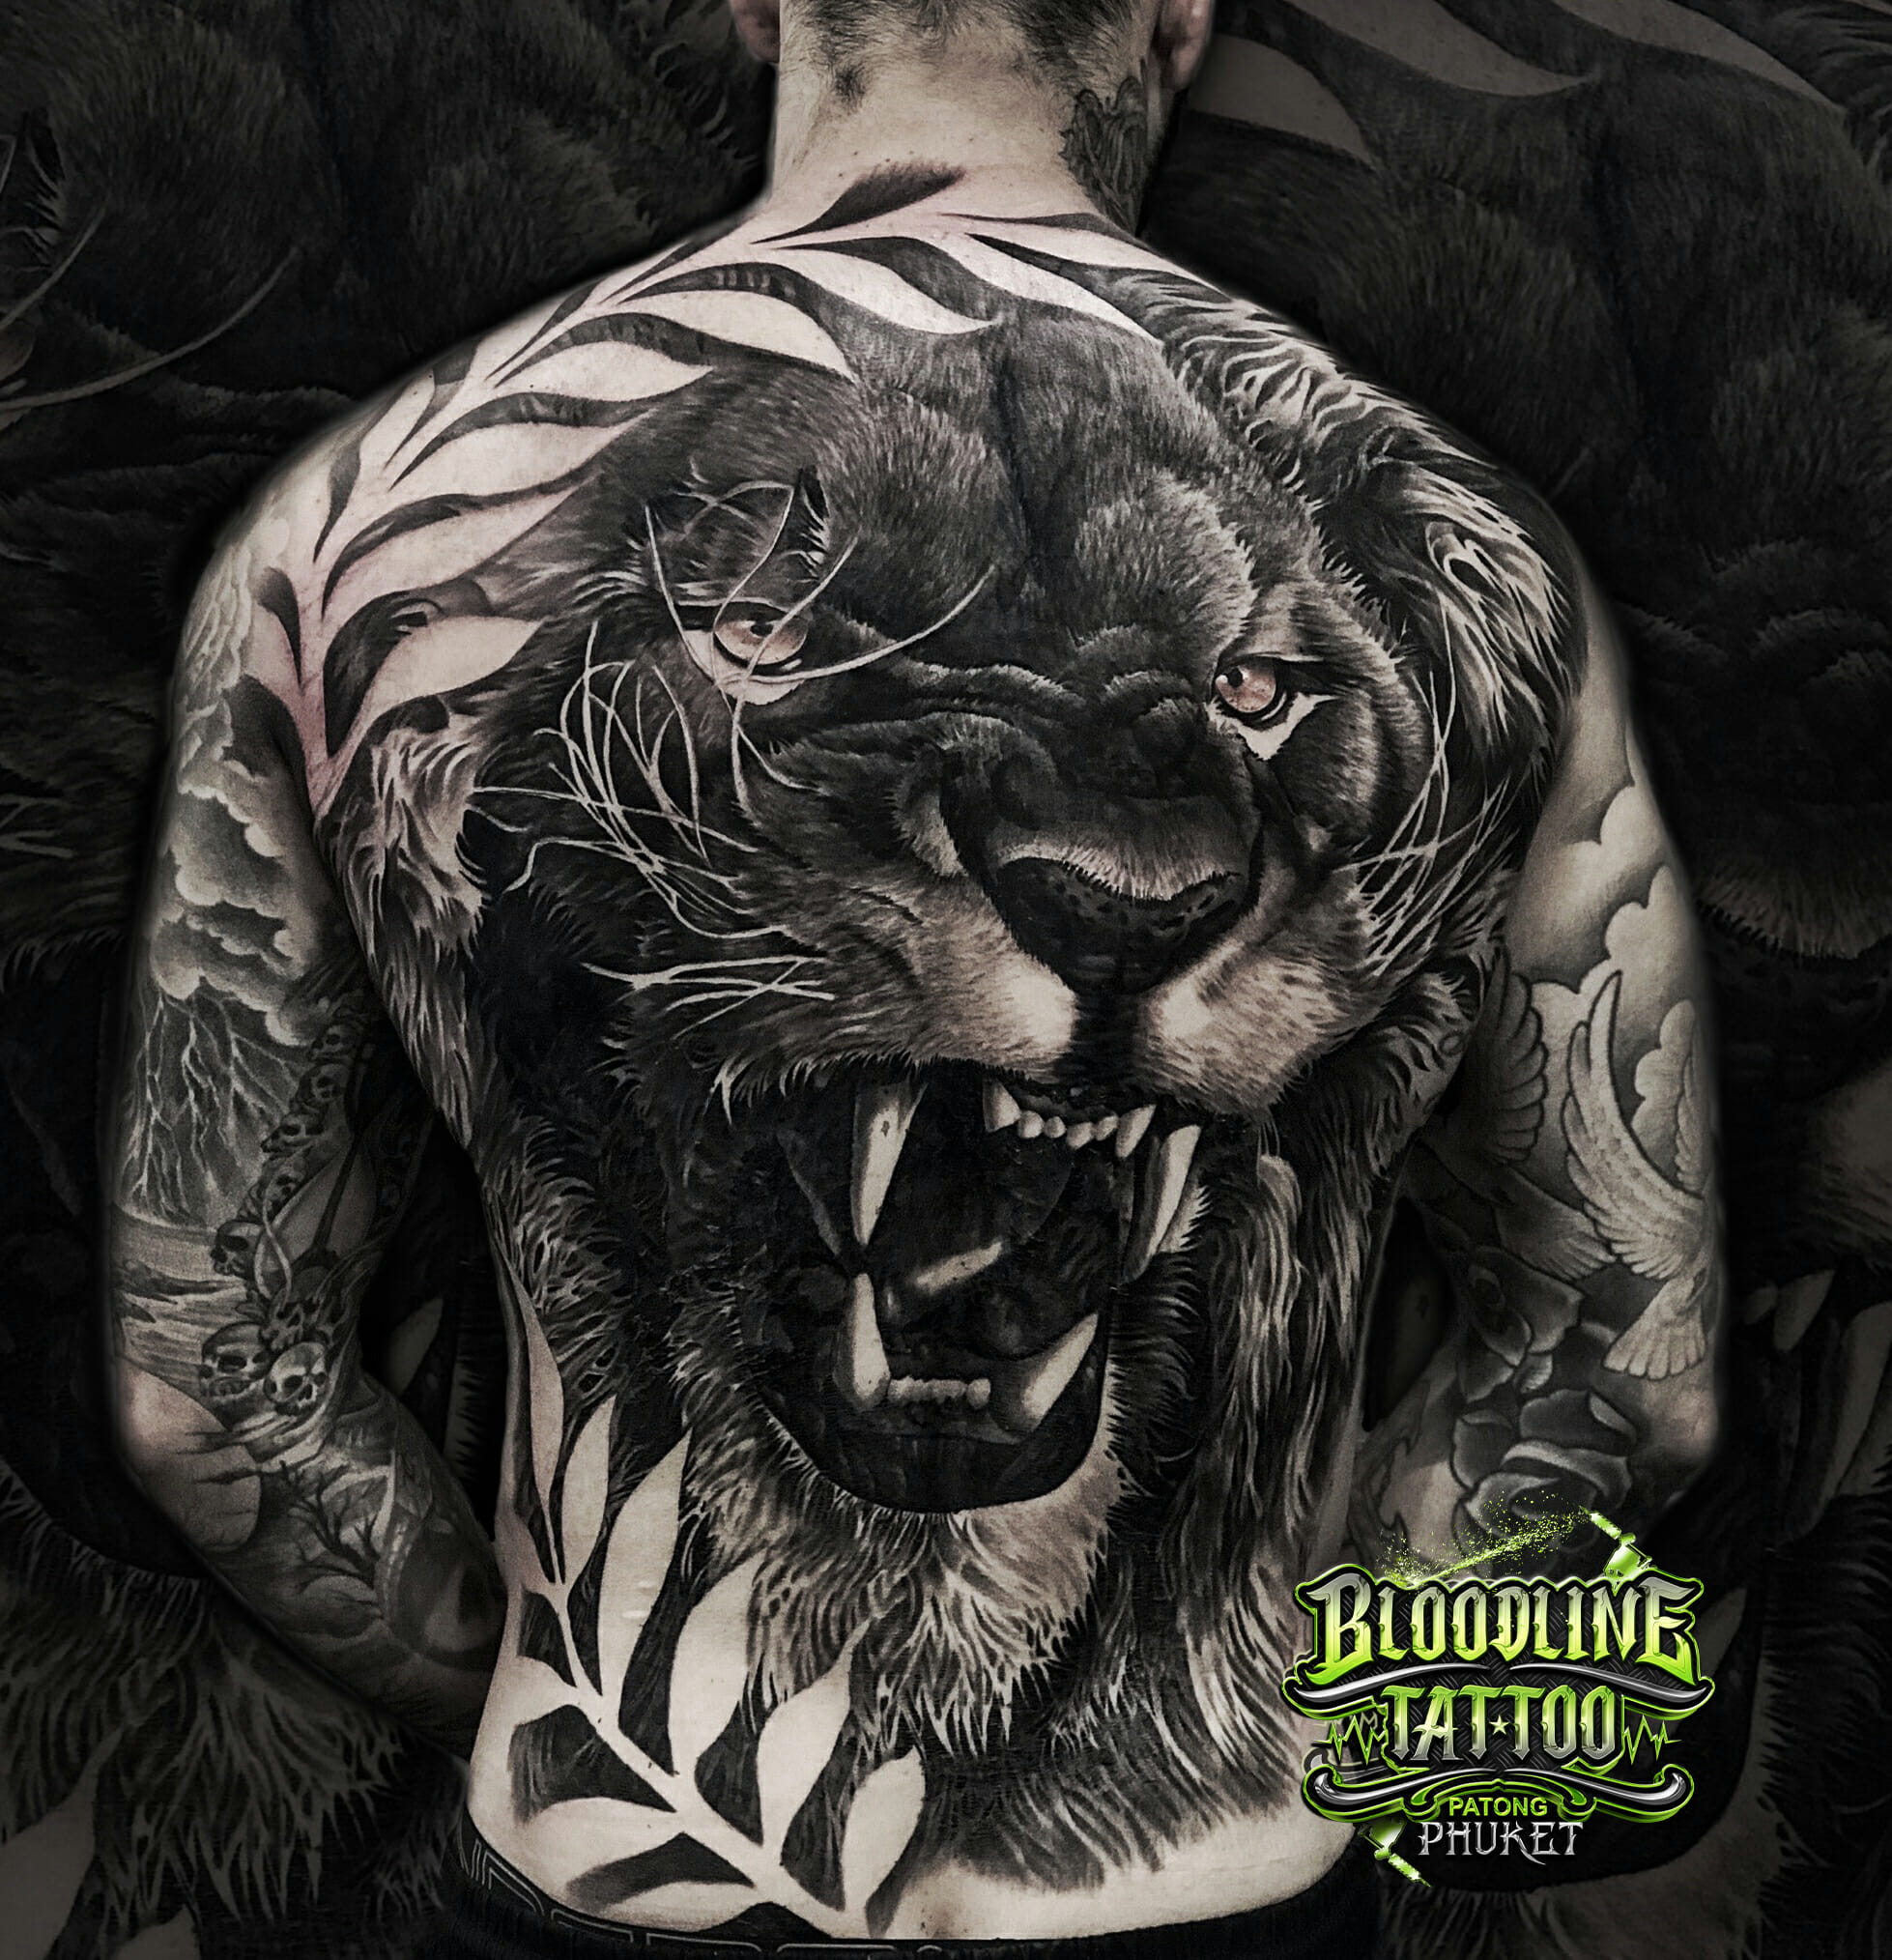 Bloodline Tattoo Patong Phuket Thailand - Best Australian Owned Tattoo  studio, Making Phuket Thailand the Best Tattoo destination  www.bloodlinetattoophuket.com #bloodlinetattoophuket #bloodlinefamily # tattoos #Phuket #thailand | Facebook